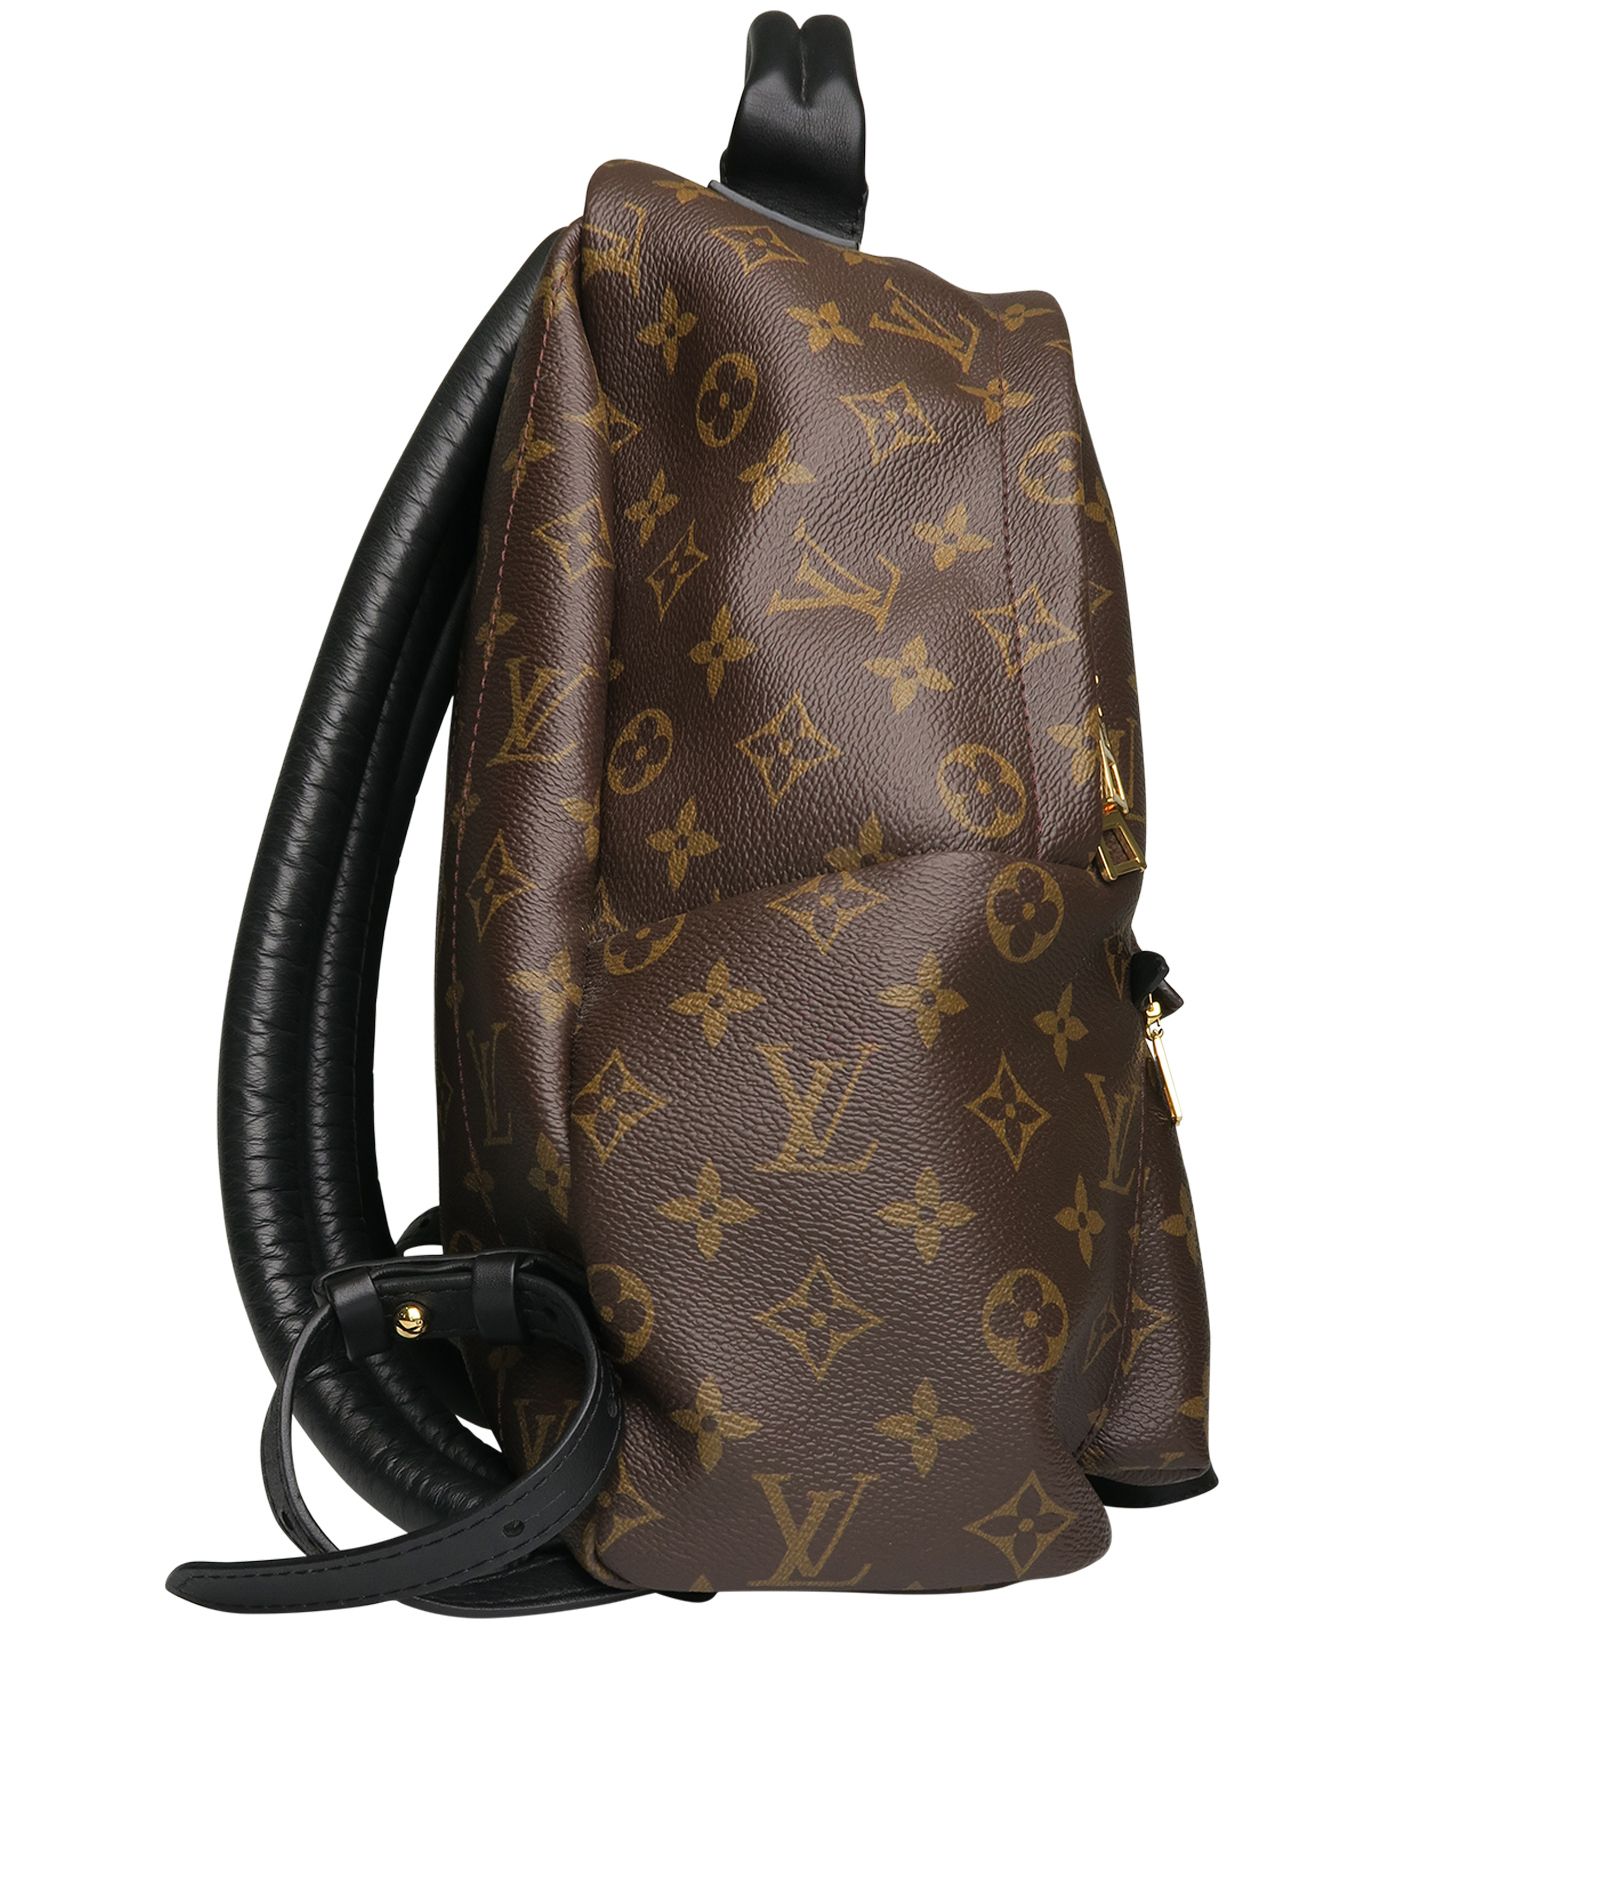 Palm Springs MM backpack, Louis Vuitton - Designer Exchange